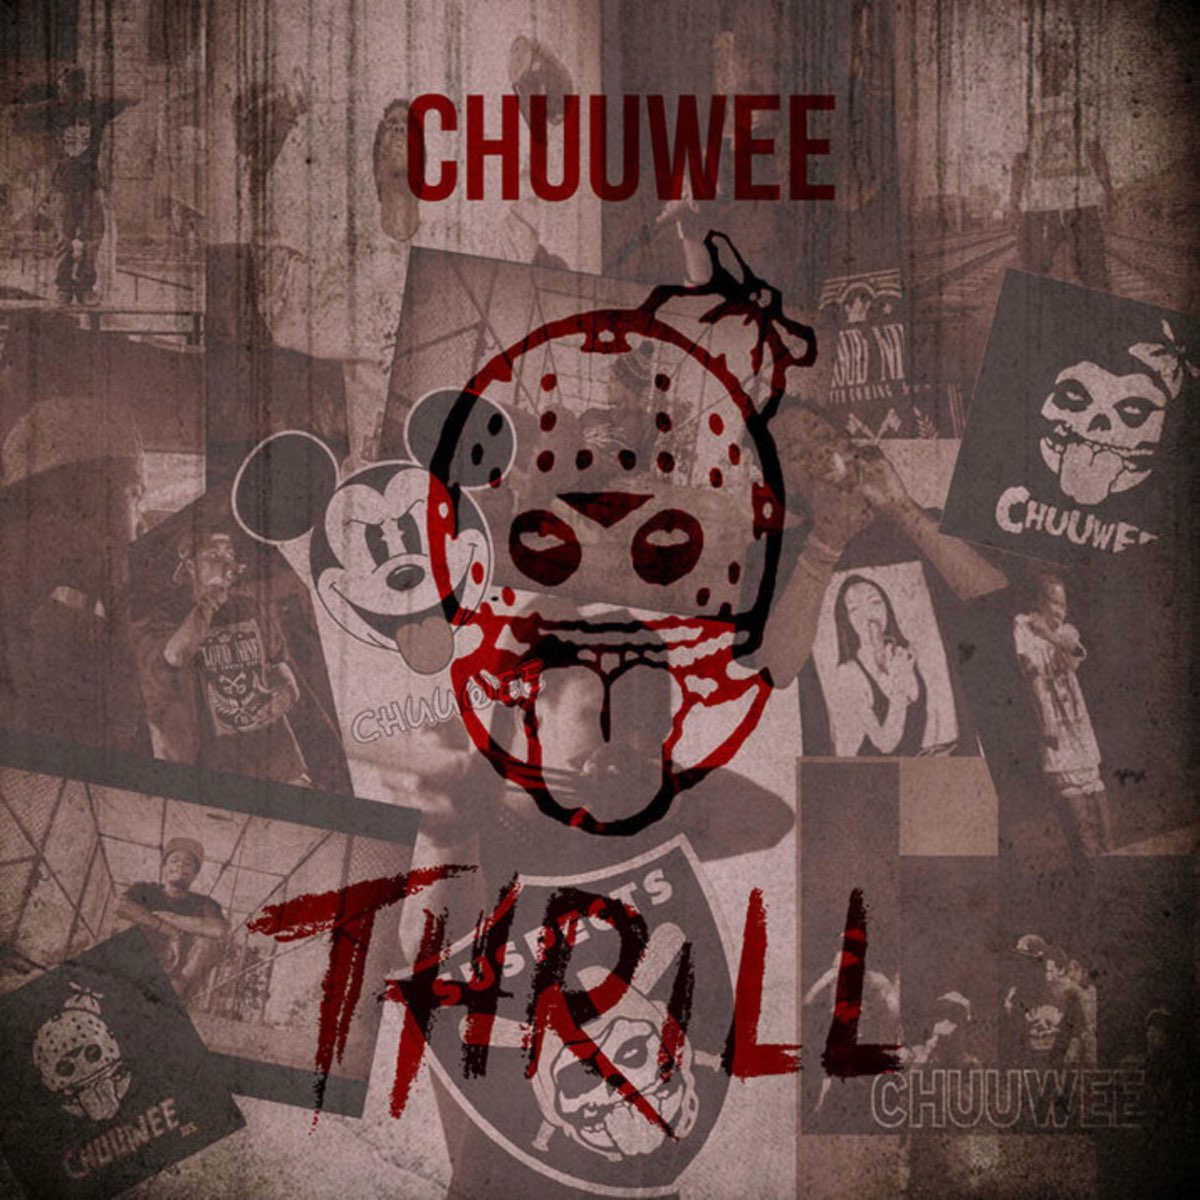 Chuuwee - ThriLL